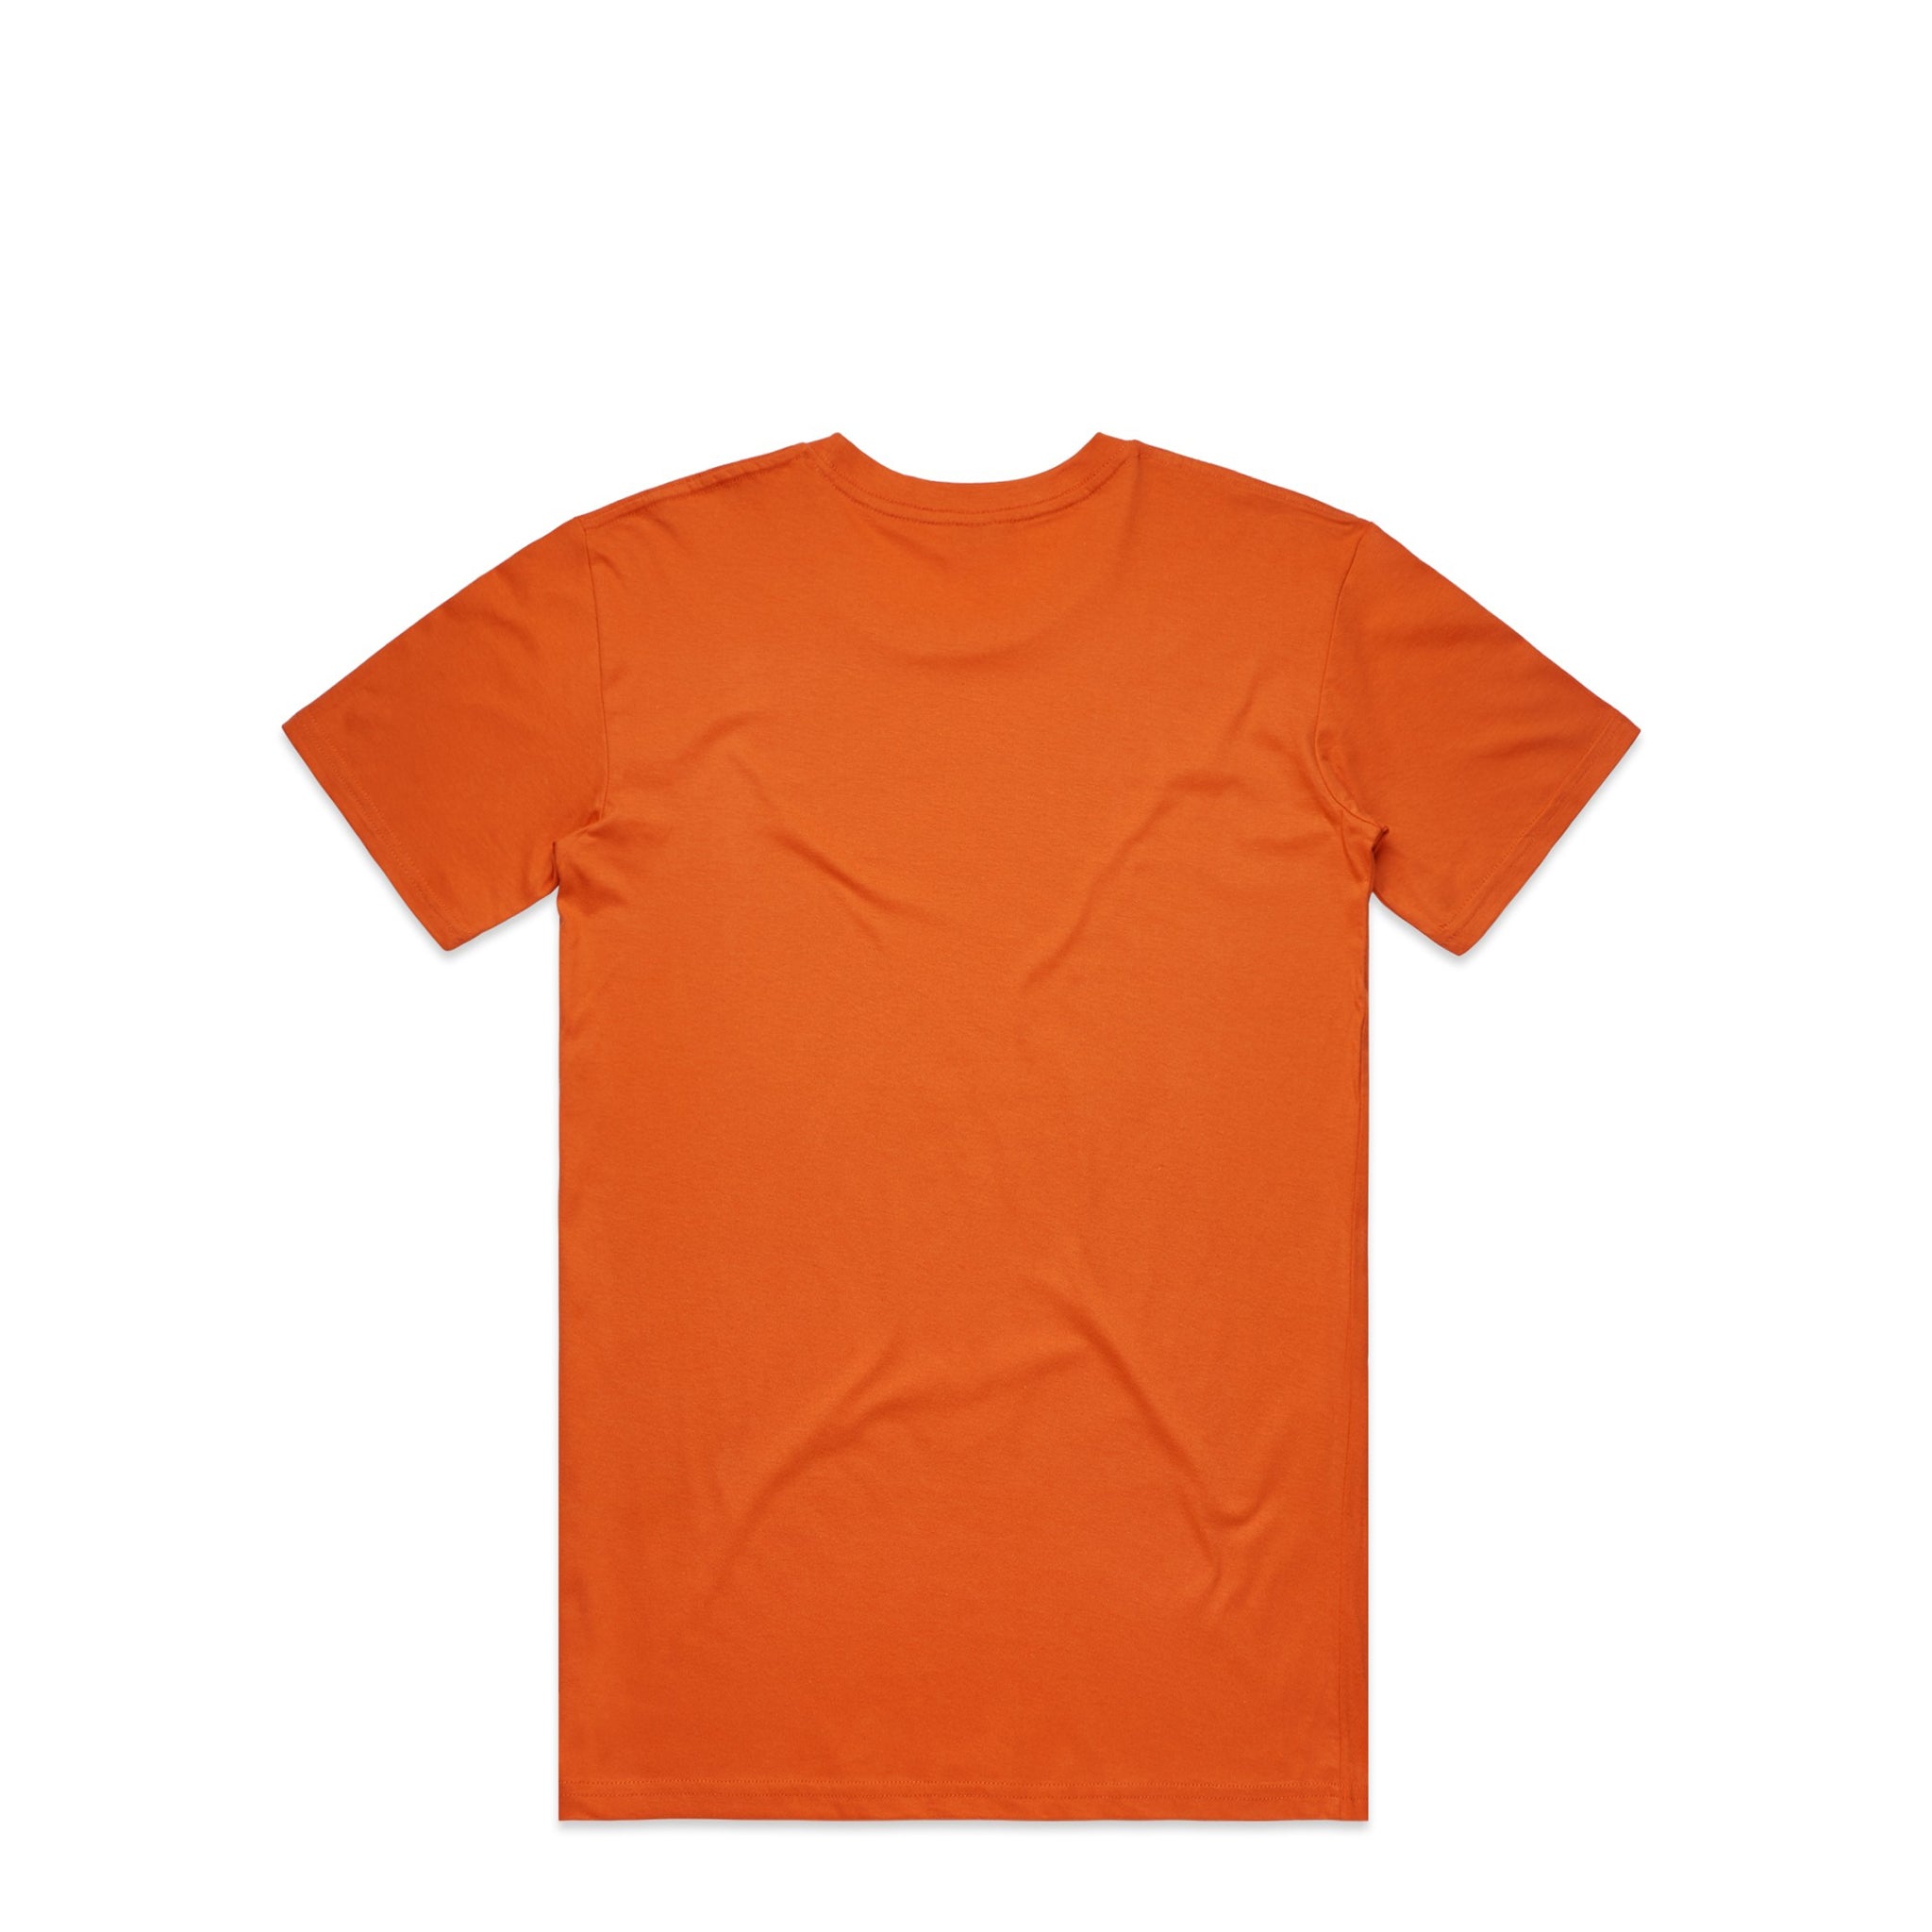 Rockstar Black Roundel T-Shirt – Orange